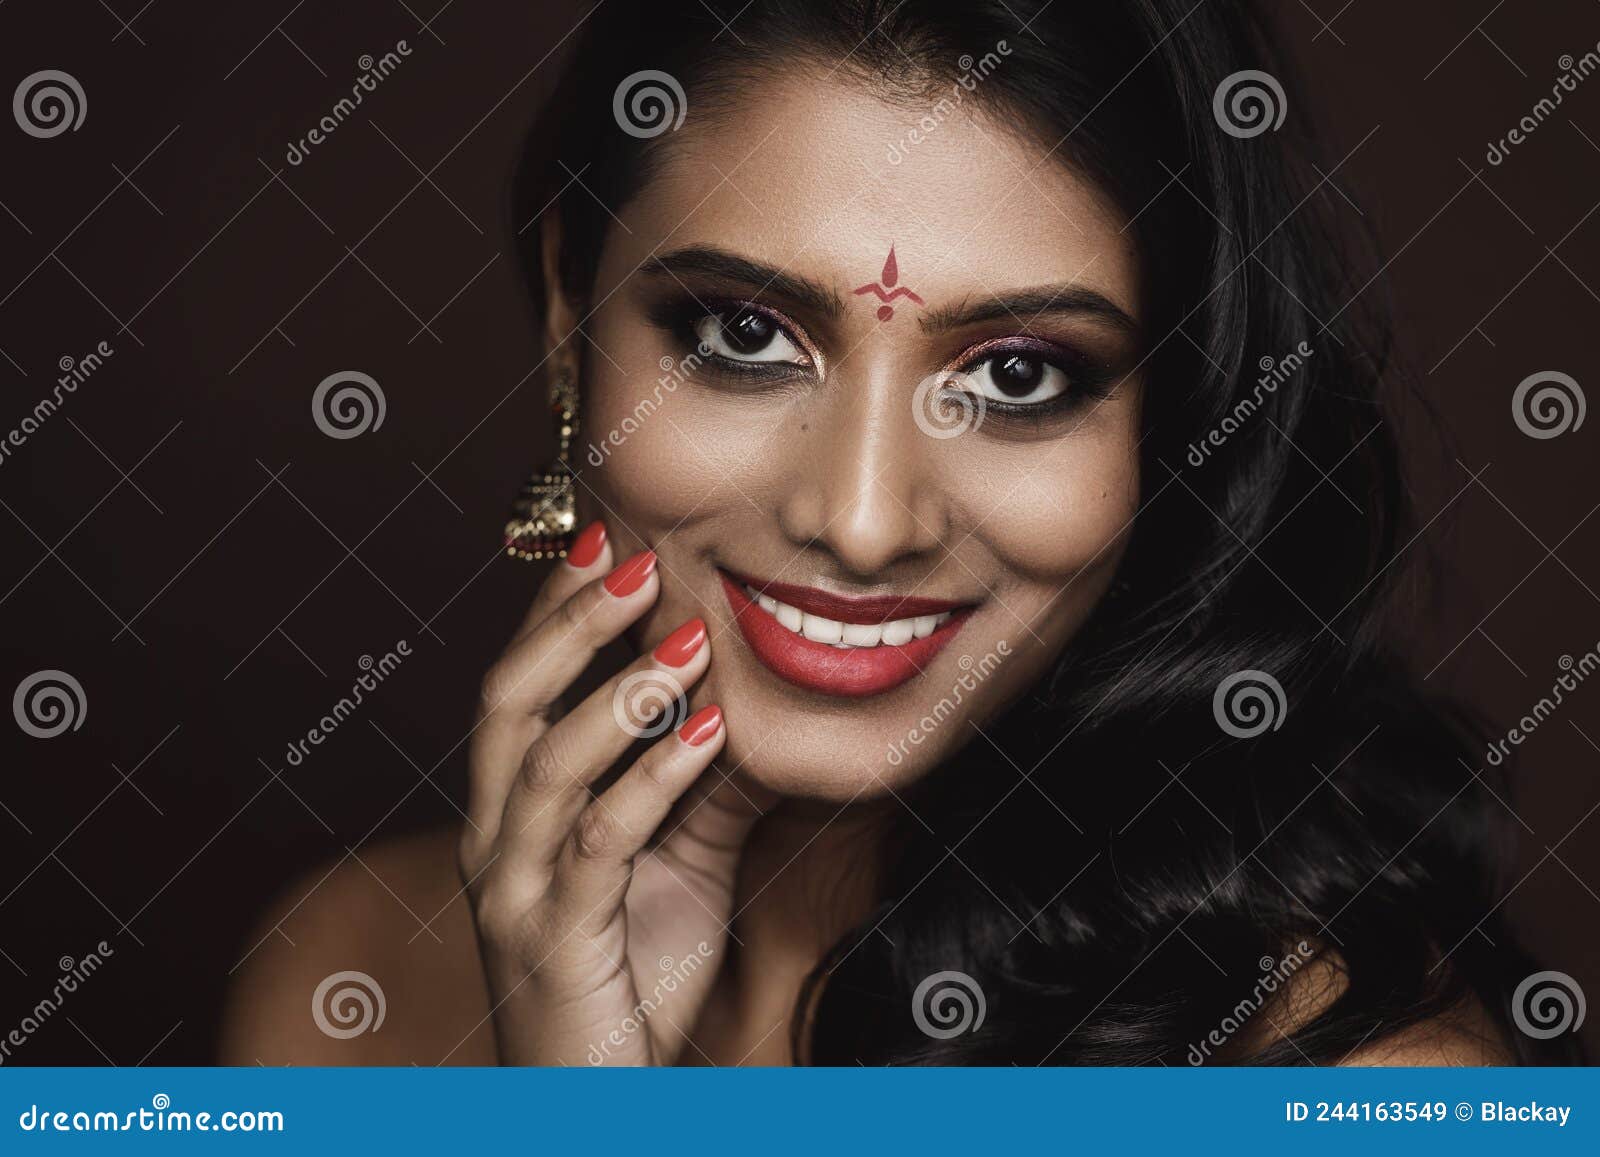 Indian BRIDAL Makeup , Bridal makeup hairstyle , Latest Indian bridal makeup  . Wedding makeup images - Stock Image - Everypixel